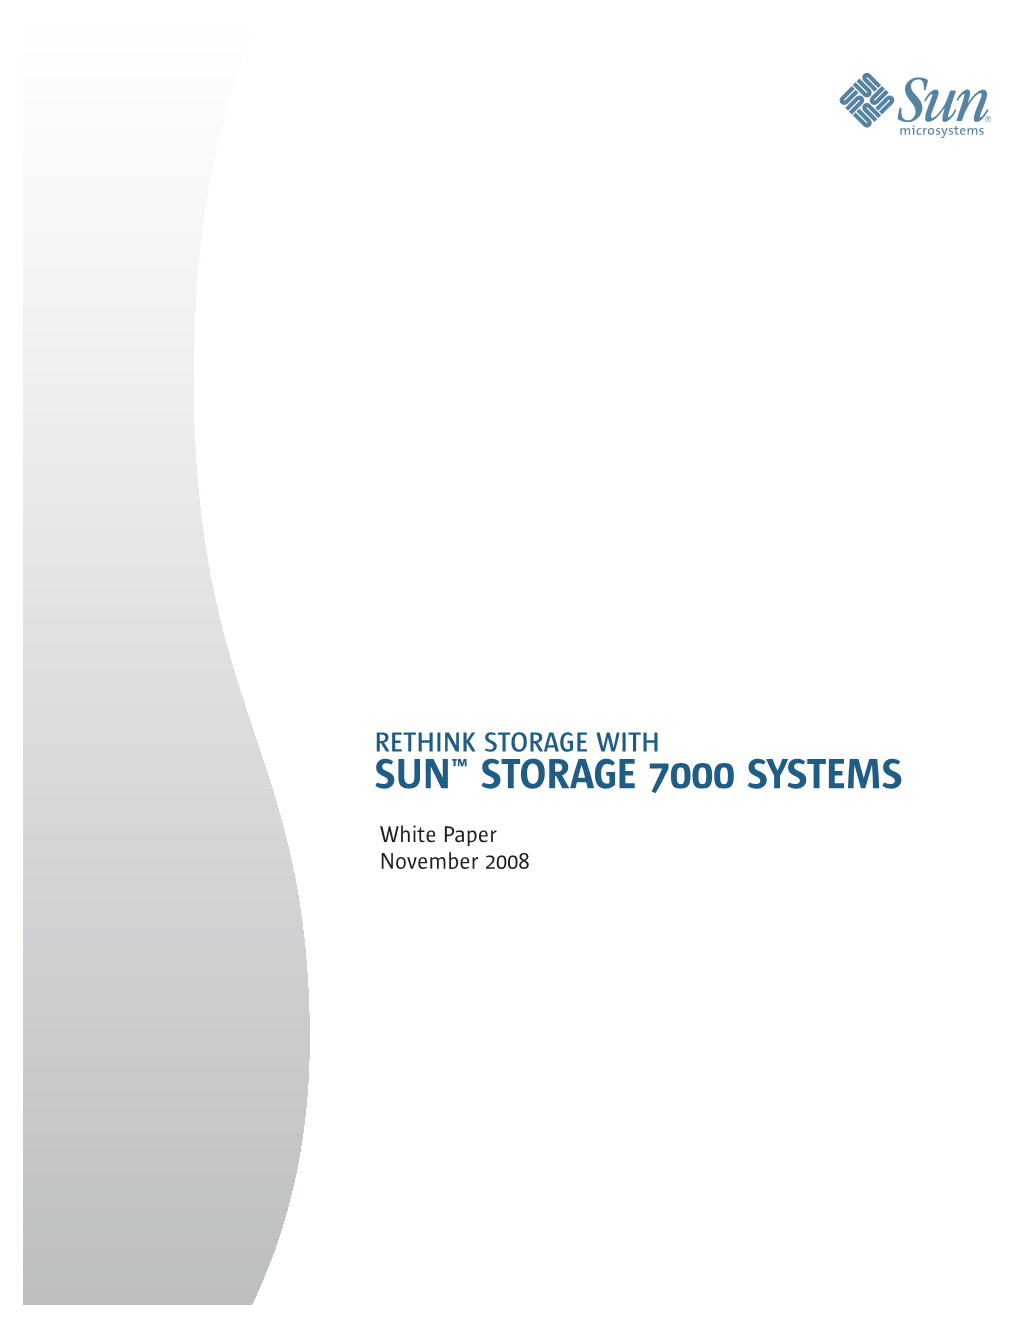 Rethink Storage with SUN STORAGE 7000 SYSTEMS